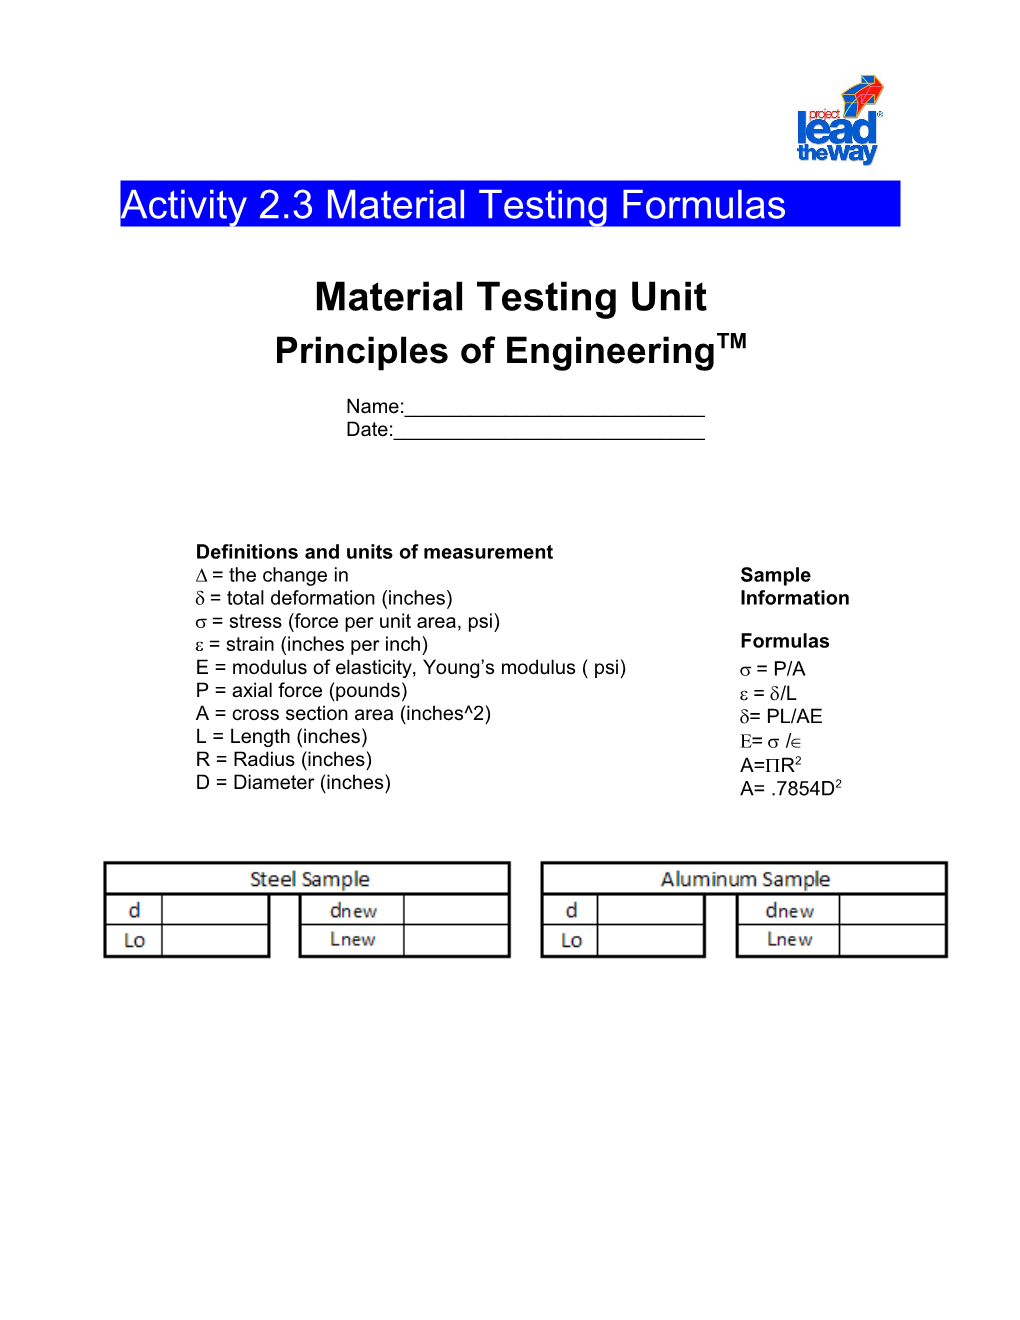 Activity 6.5 - Material Testing Formulas